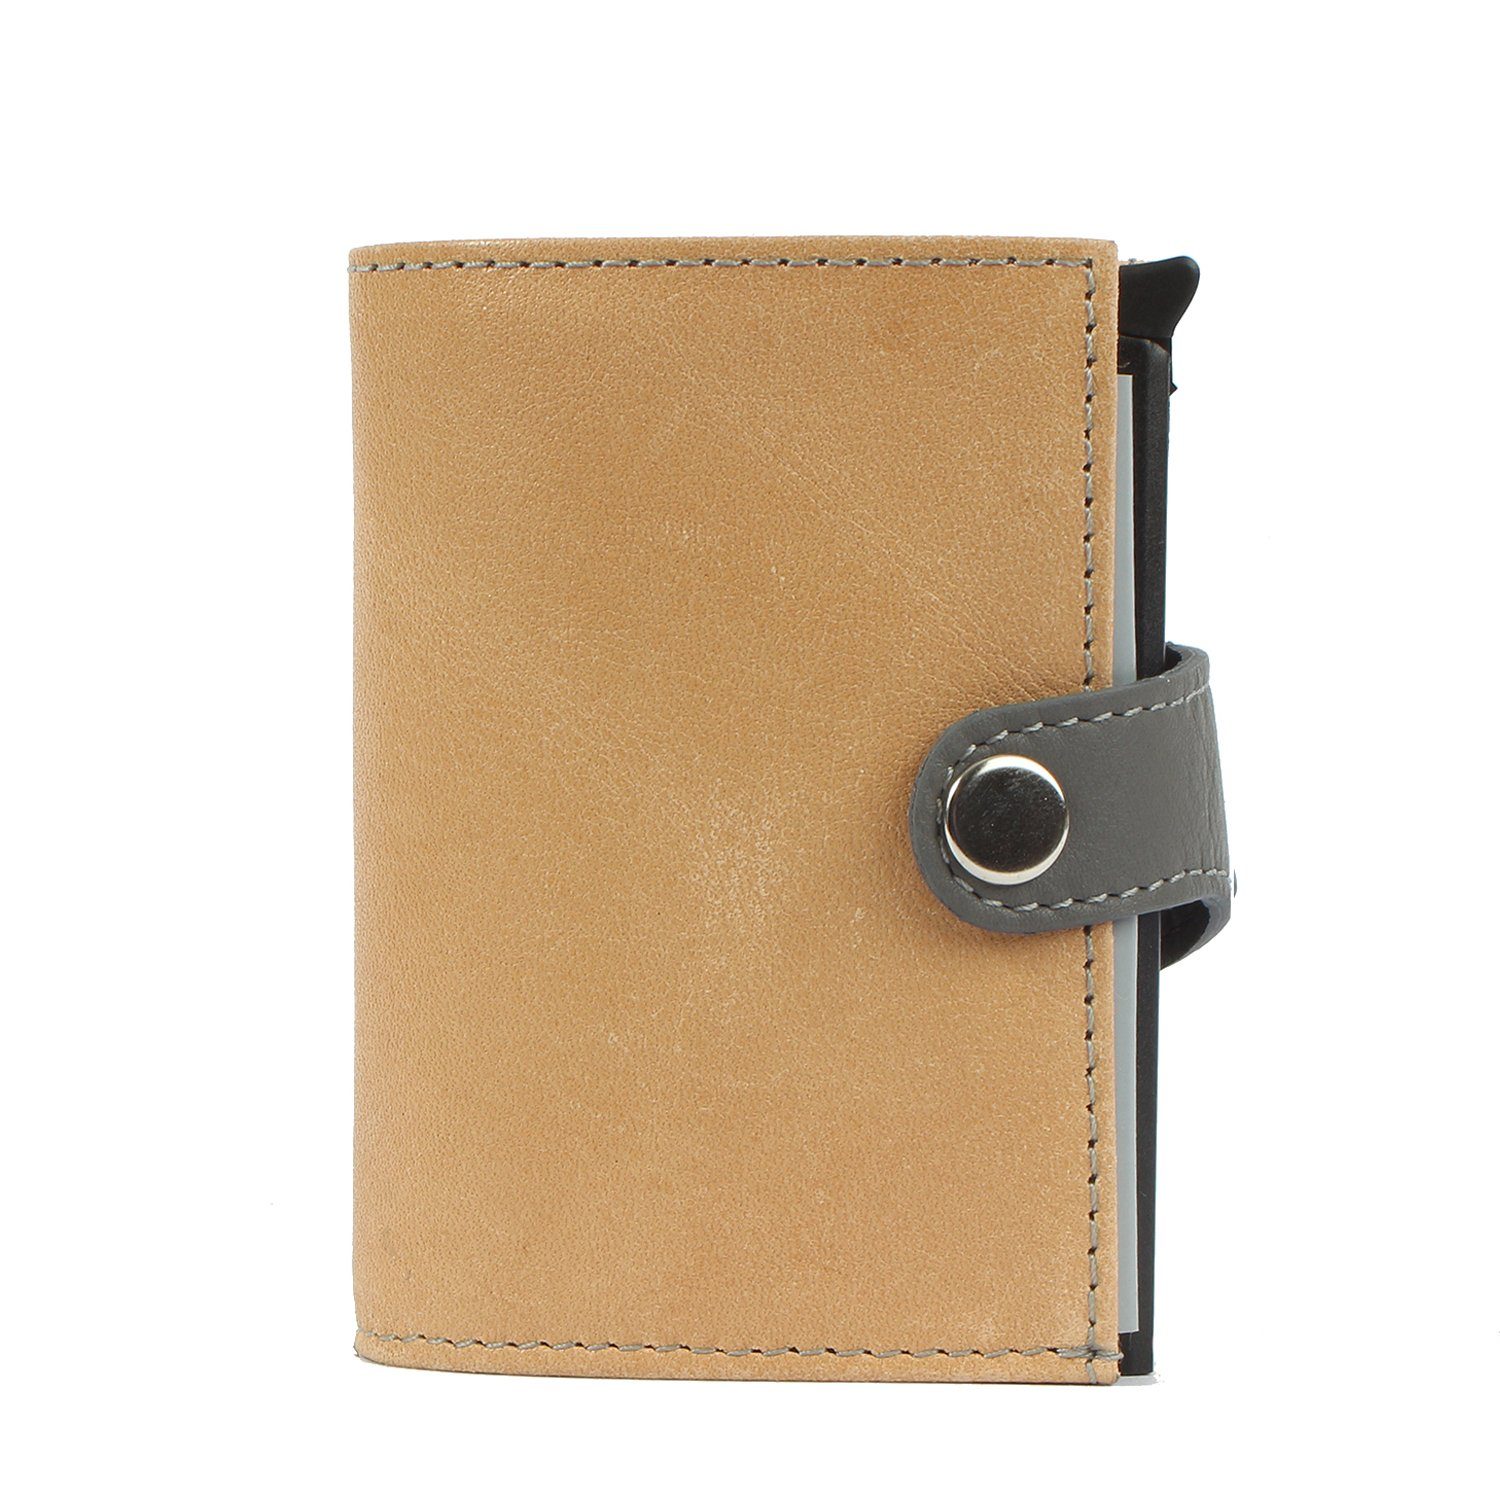 Margelisch Mini Geldbörse noonyu double natural aus leather, Leder RFID Upcycling Kreditkartenbörse